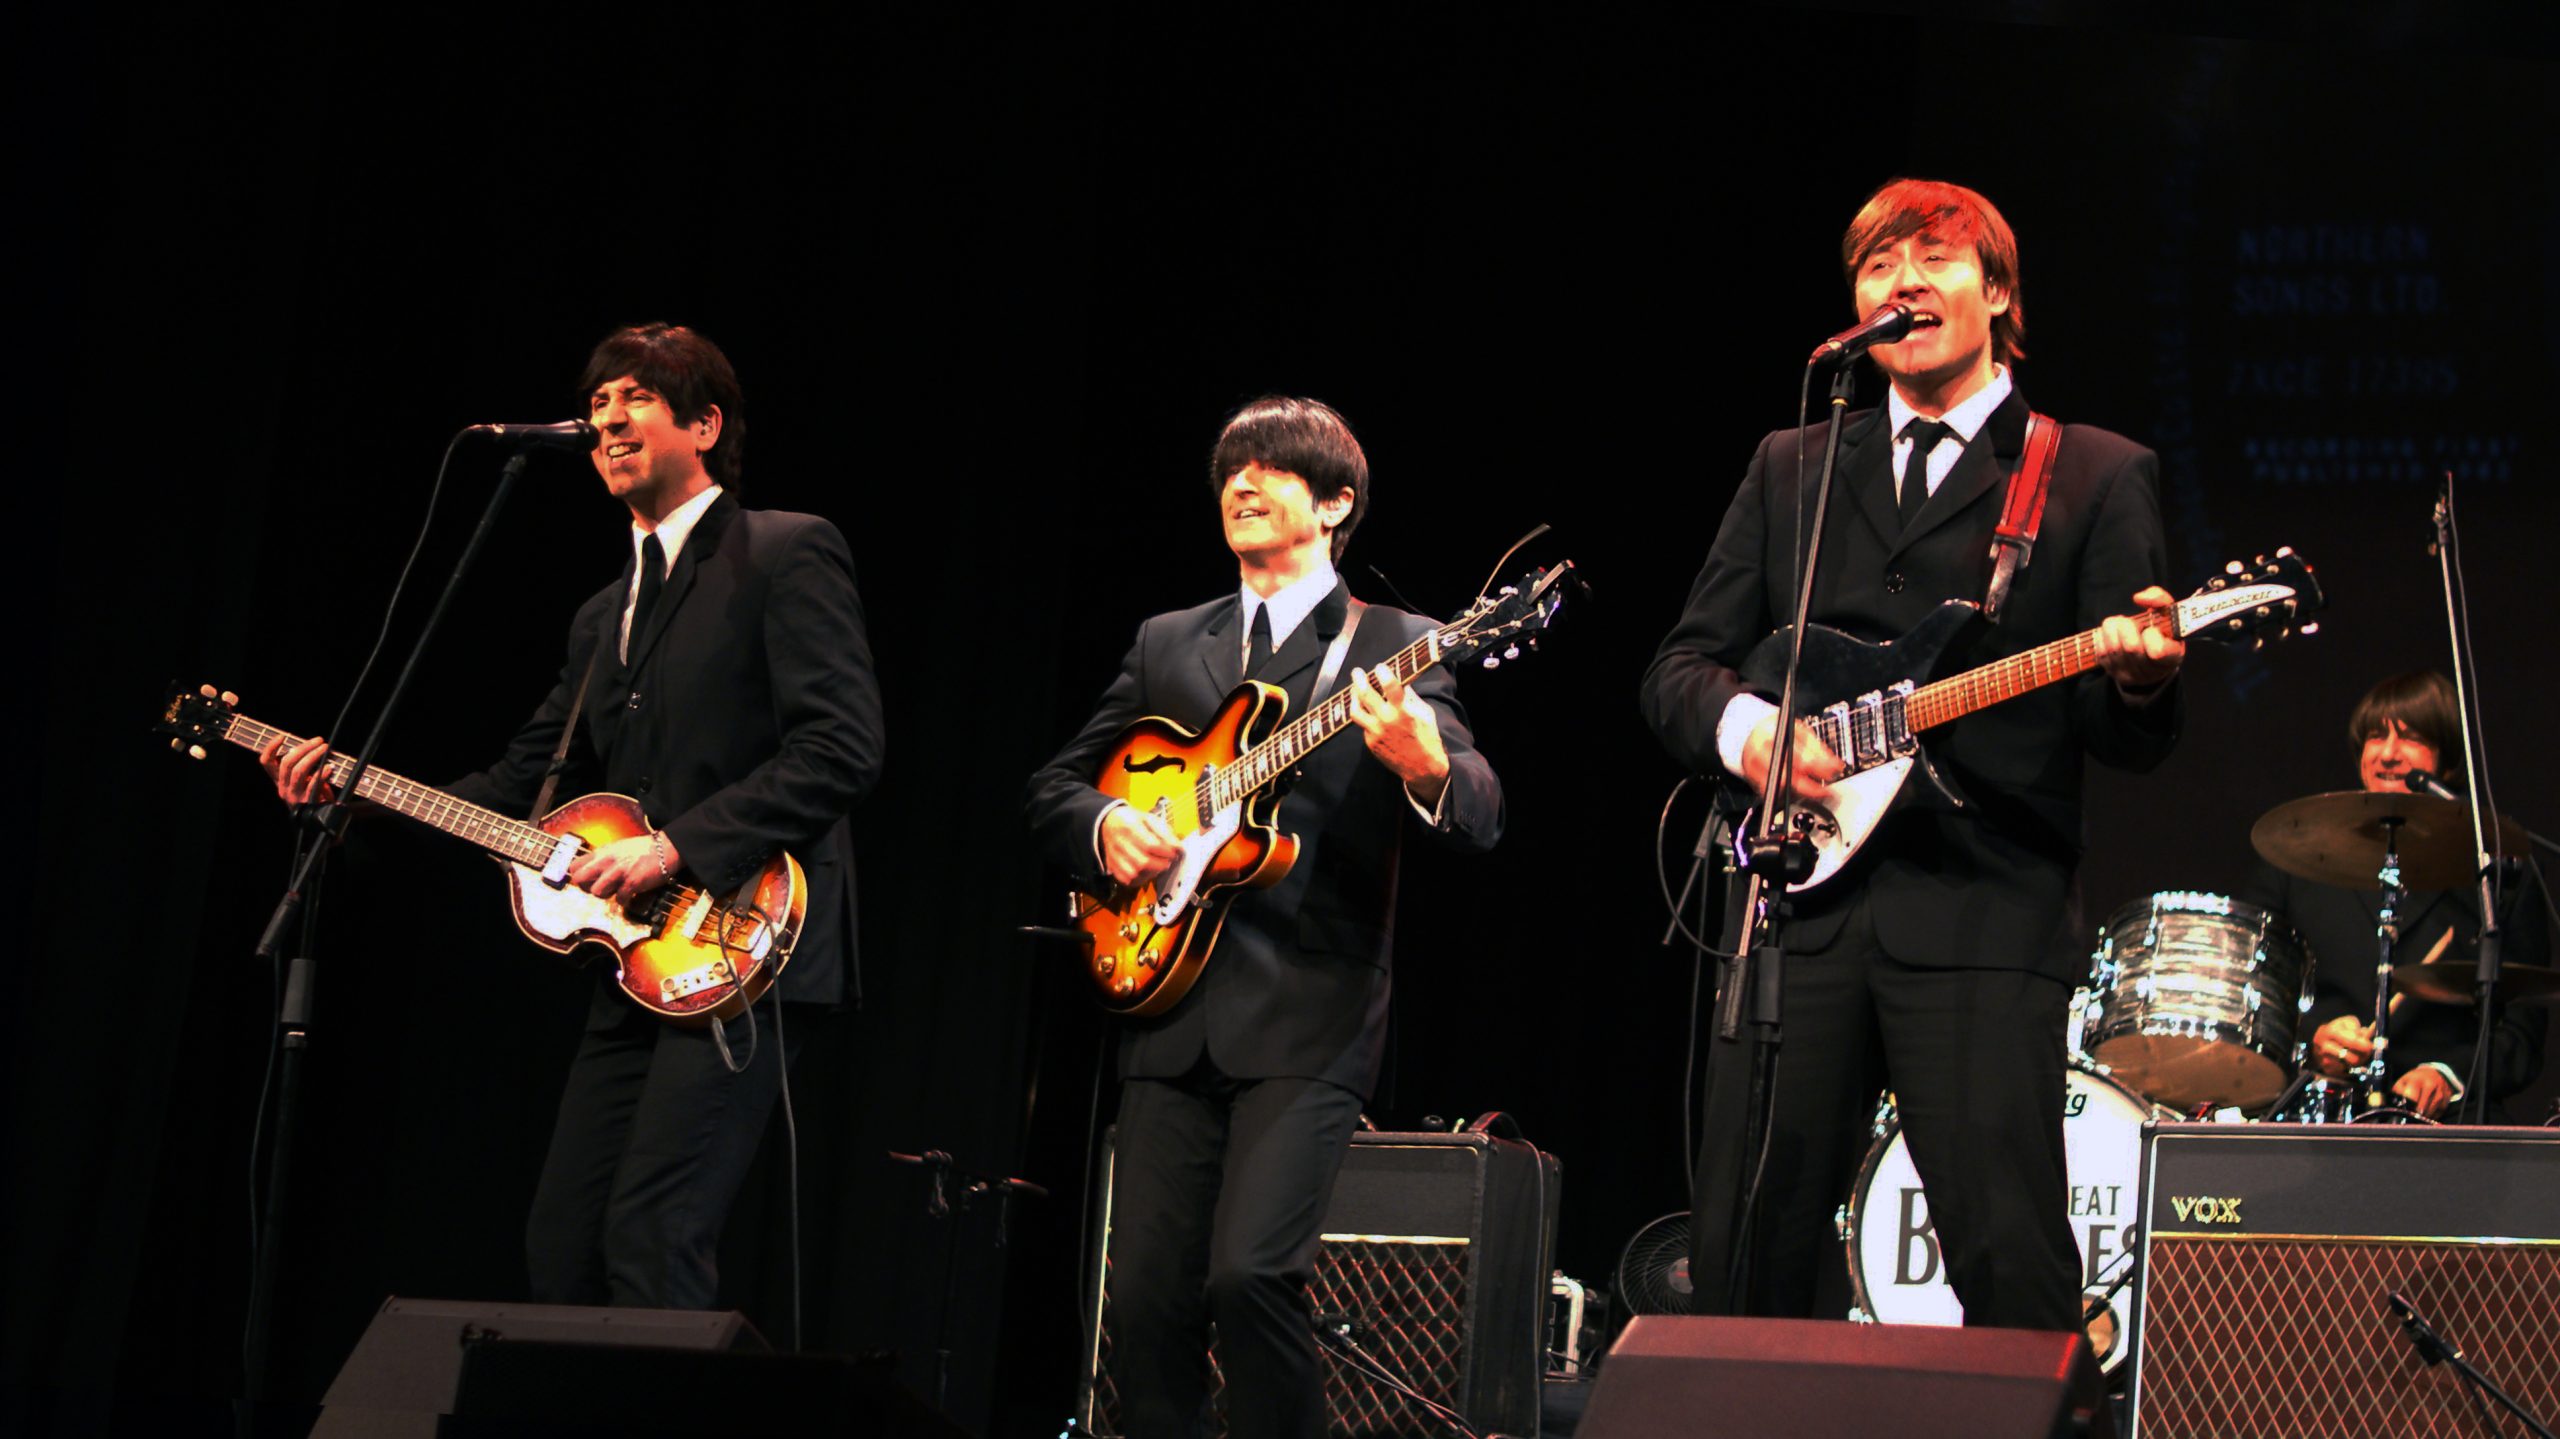 Beatles Tribute - The Vox Beatles Tribute